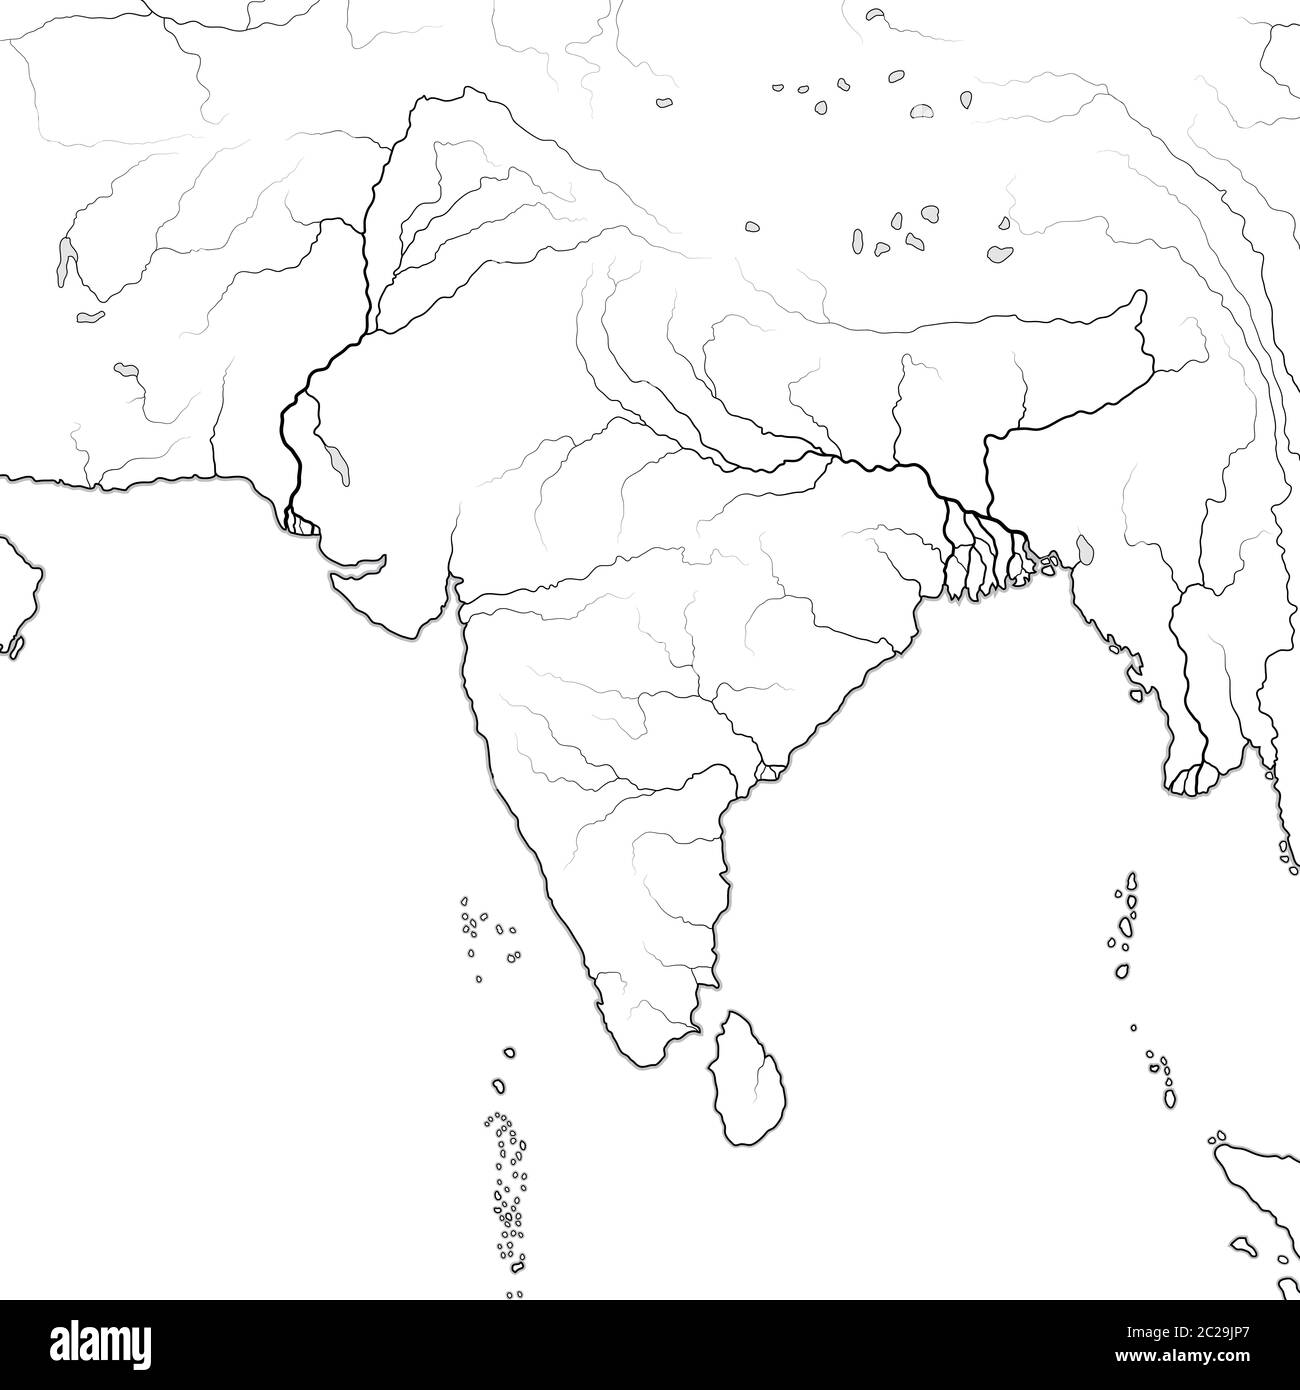 World Map of INDIAN SUBCONTINENT: India, Pakistan, Hindustan, Himalayas, Tibet, Bengal, Ceylon. Geographic chart. Stock Photo